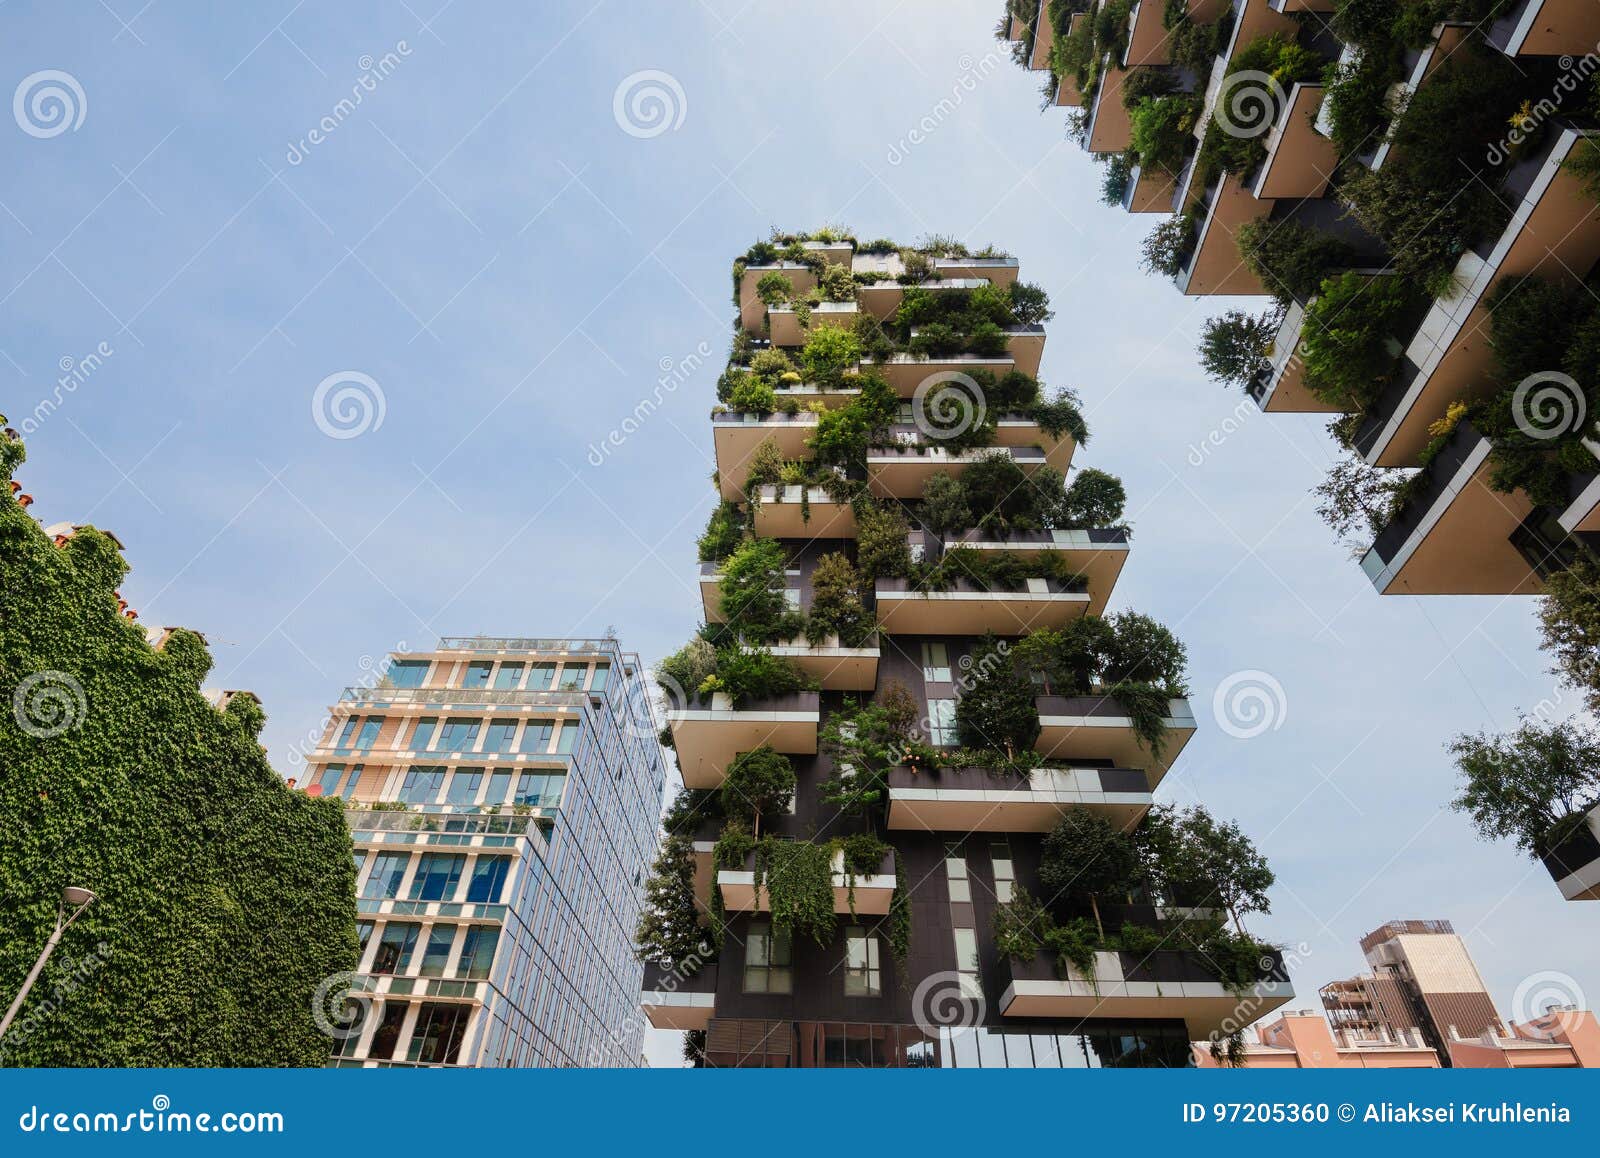 Veritcal Garden Buildings In Milan Editorial Image Image Of